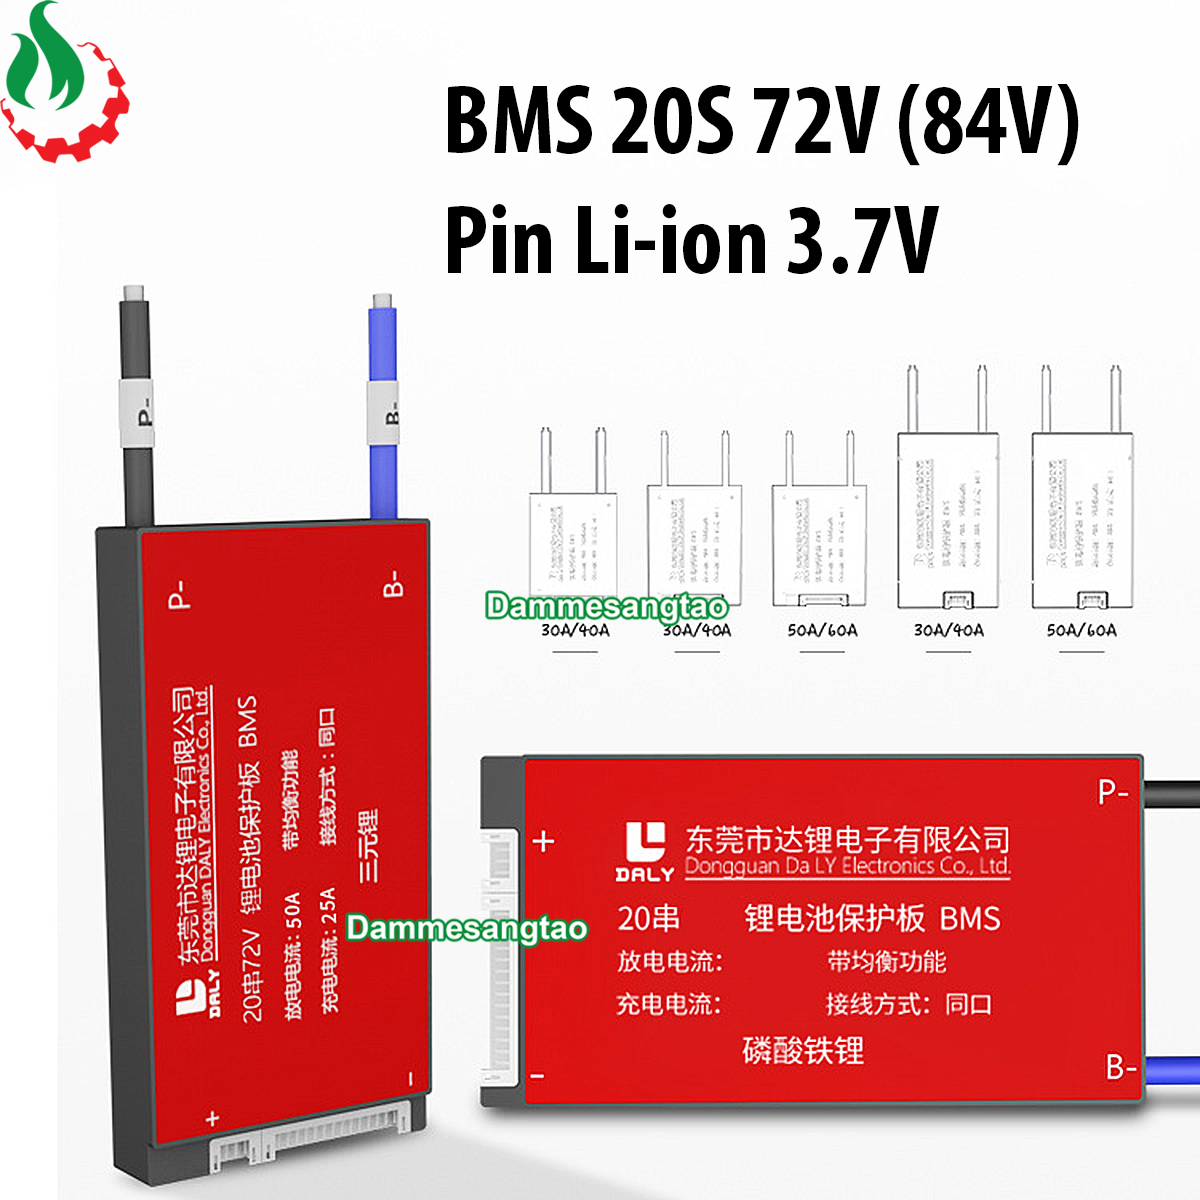 Mạch 20S 72V (84V) Daly bảo vệ pin Li-ion 3.7V